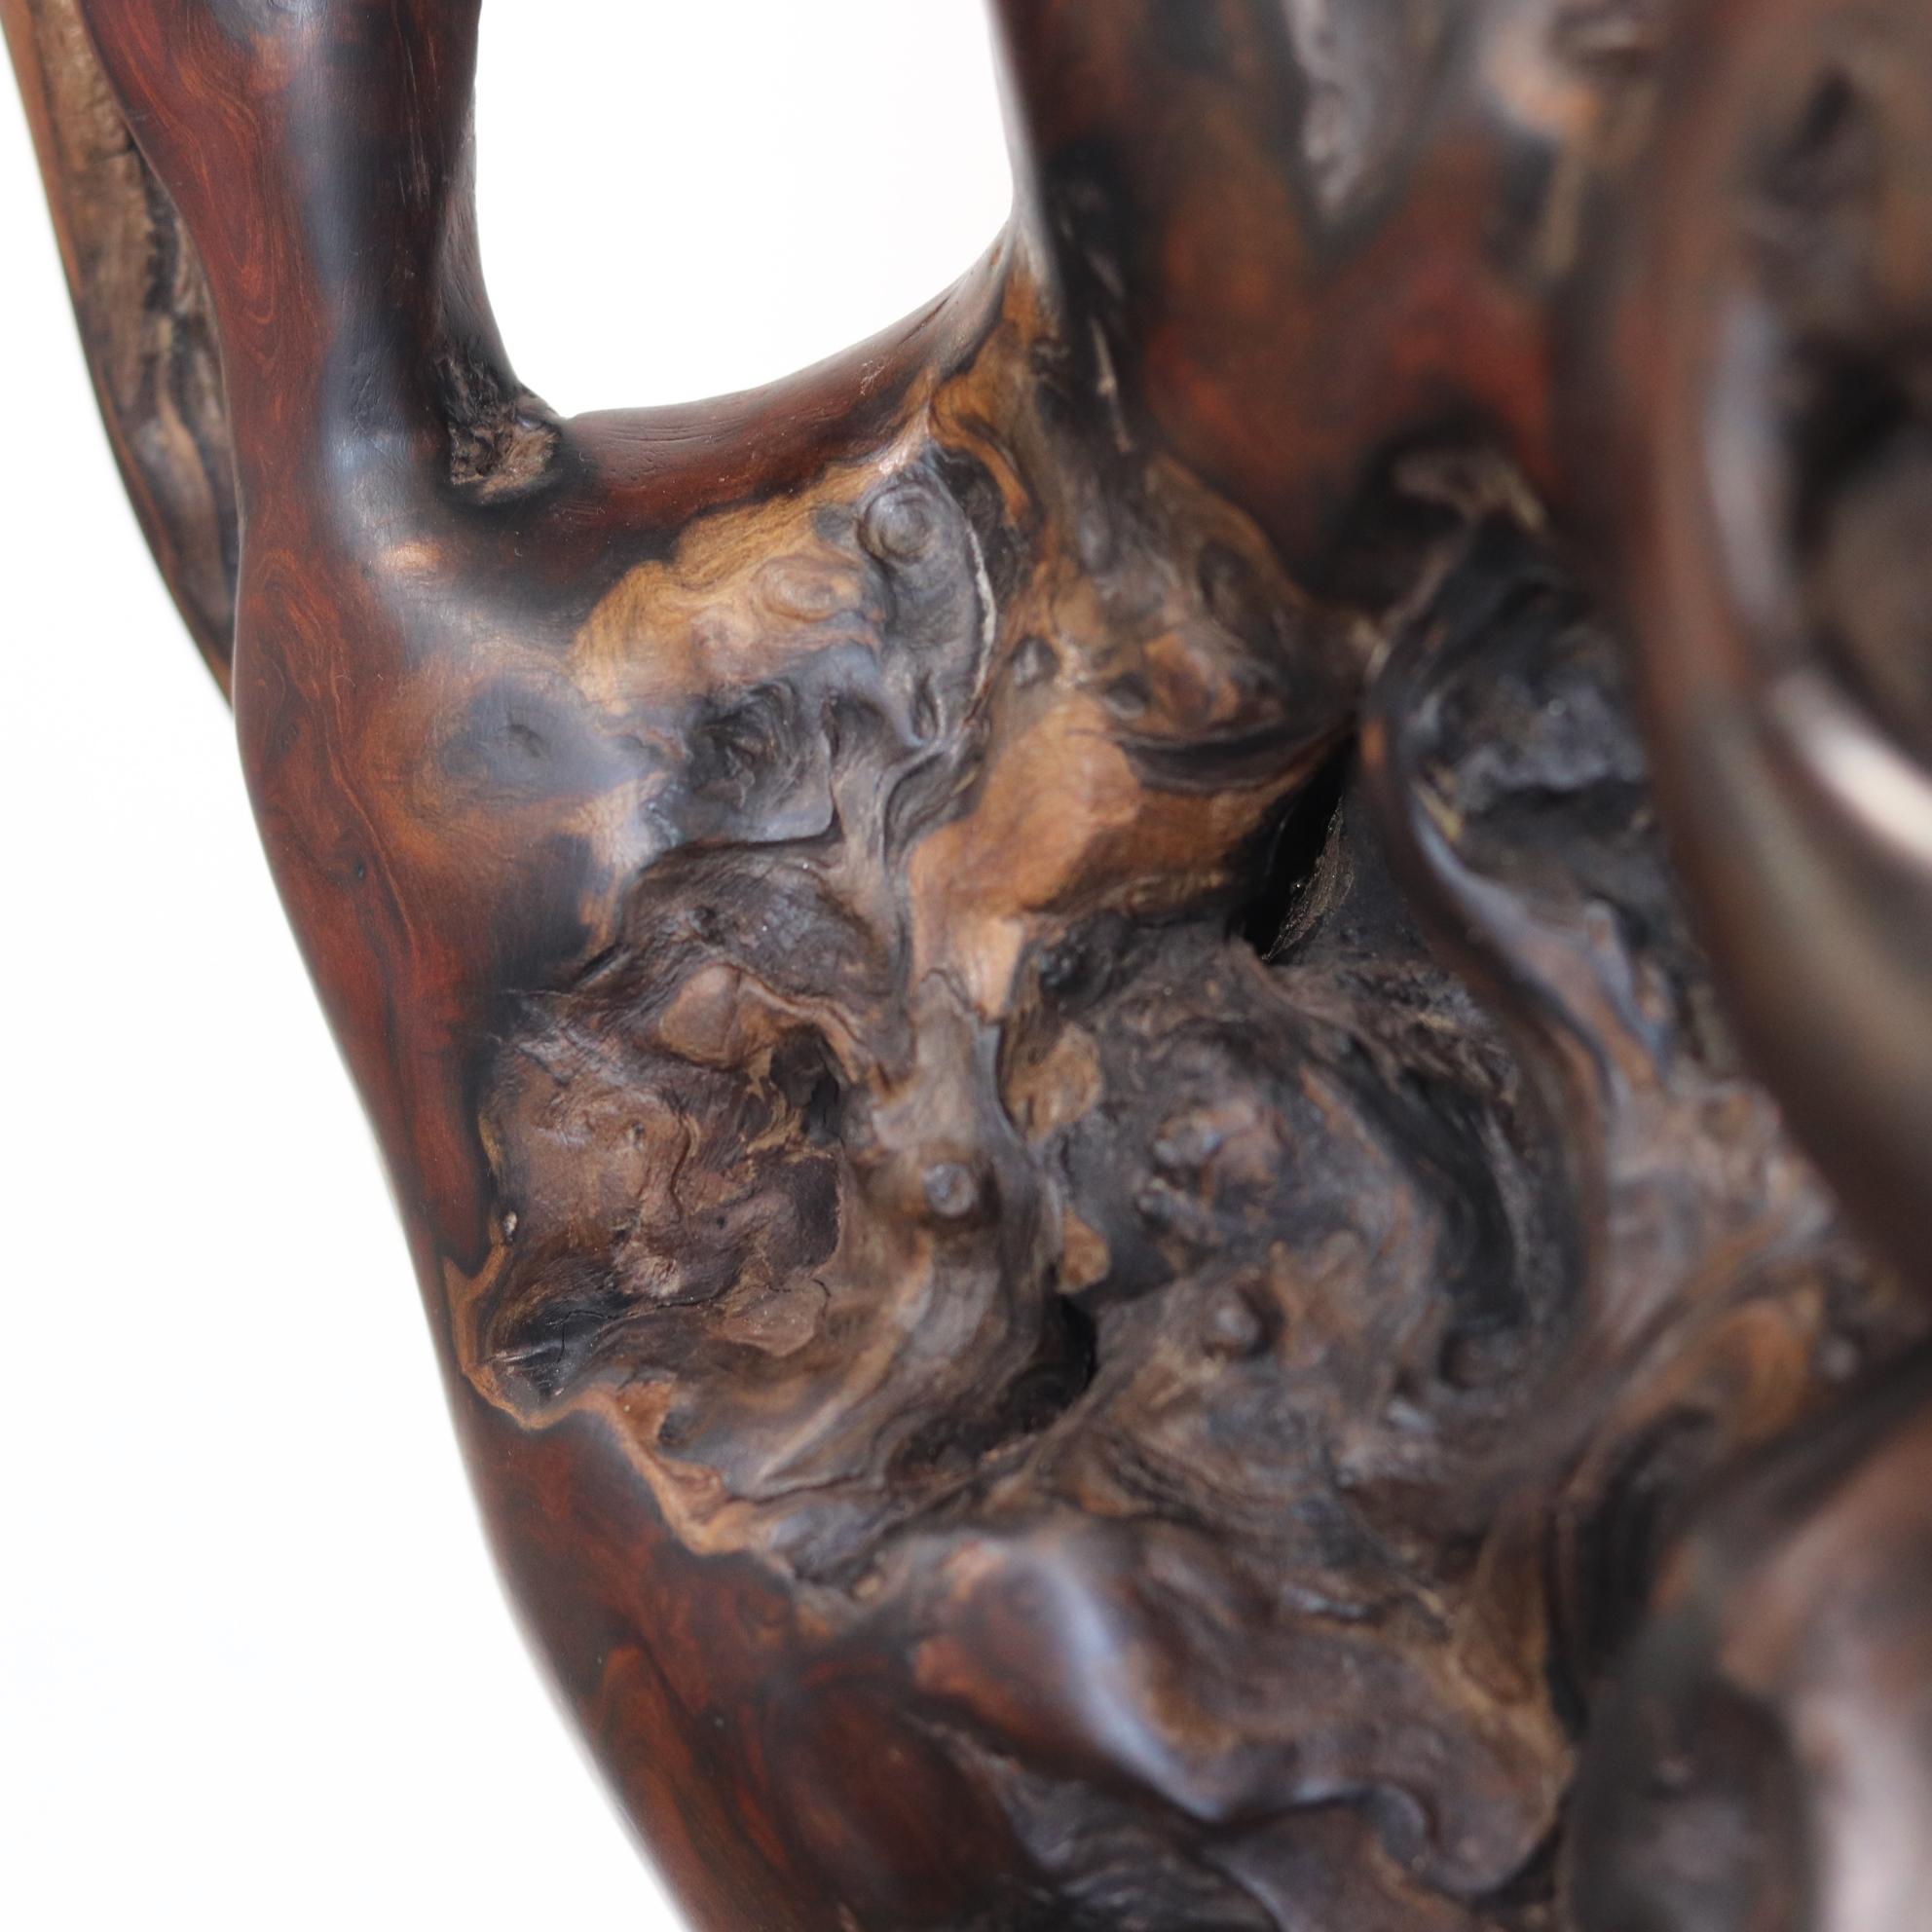 Resurrected - Brown Abstract Sculpture by Joe Garnero